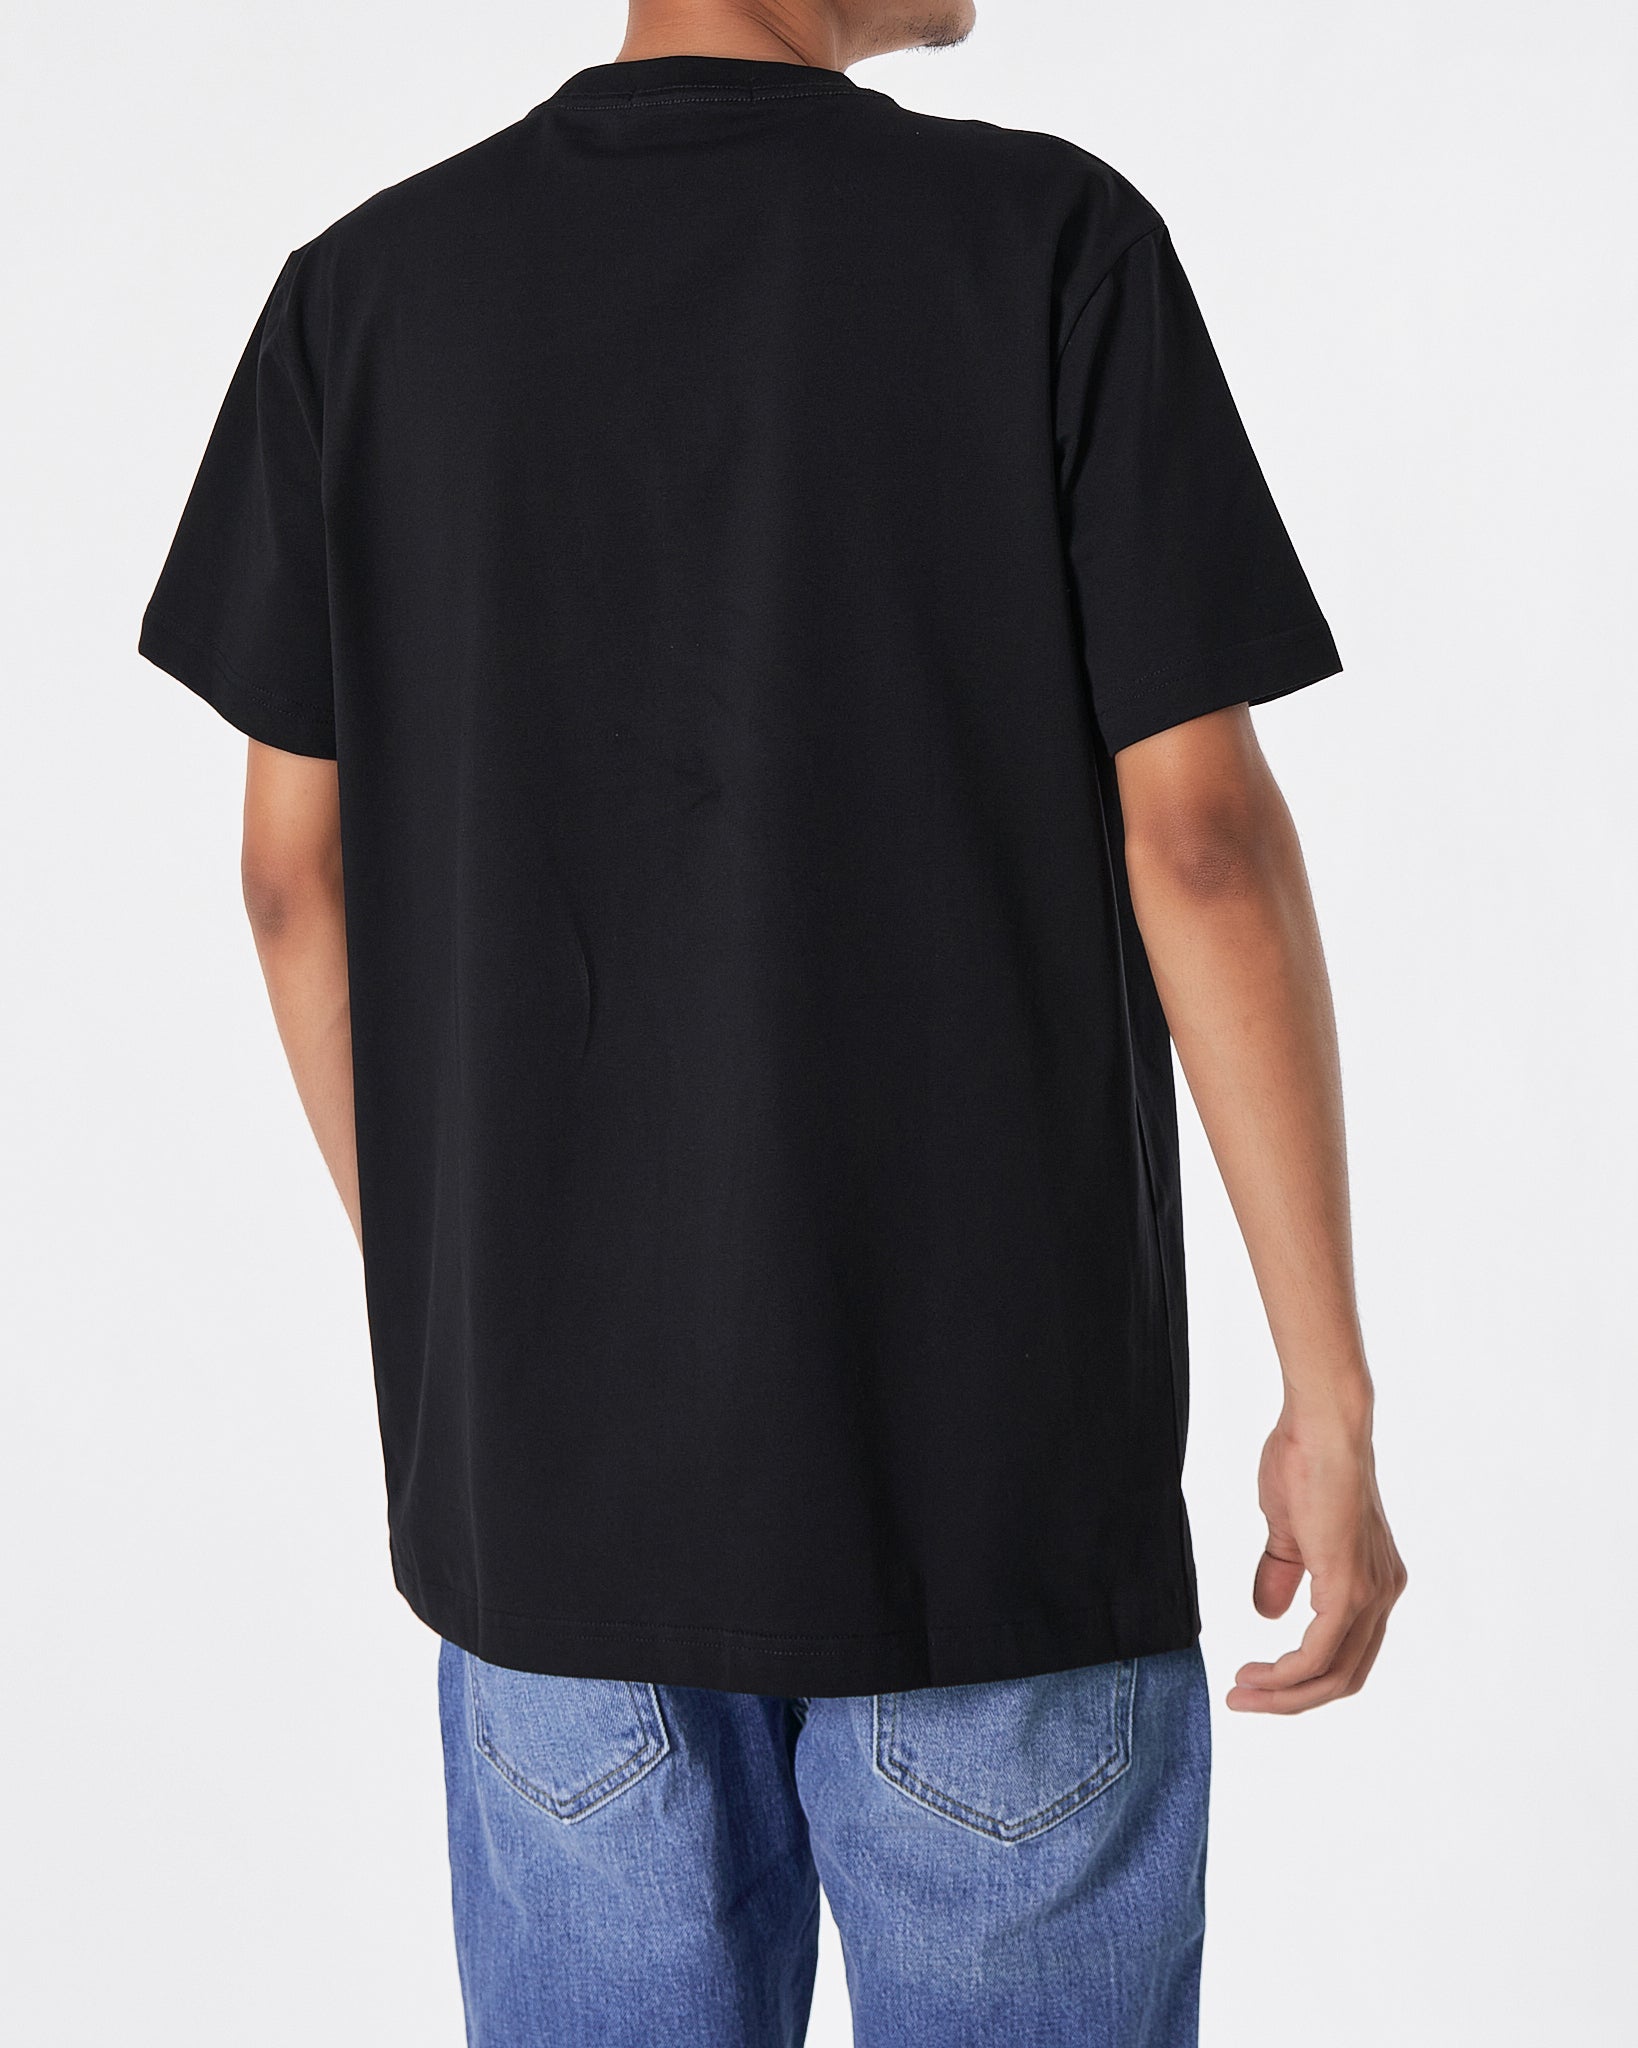 ARM Bird Printed Men Black T-Shirt 17.90